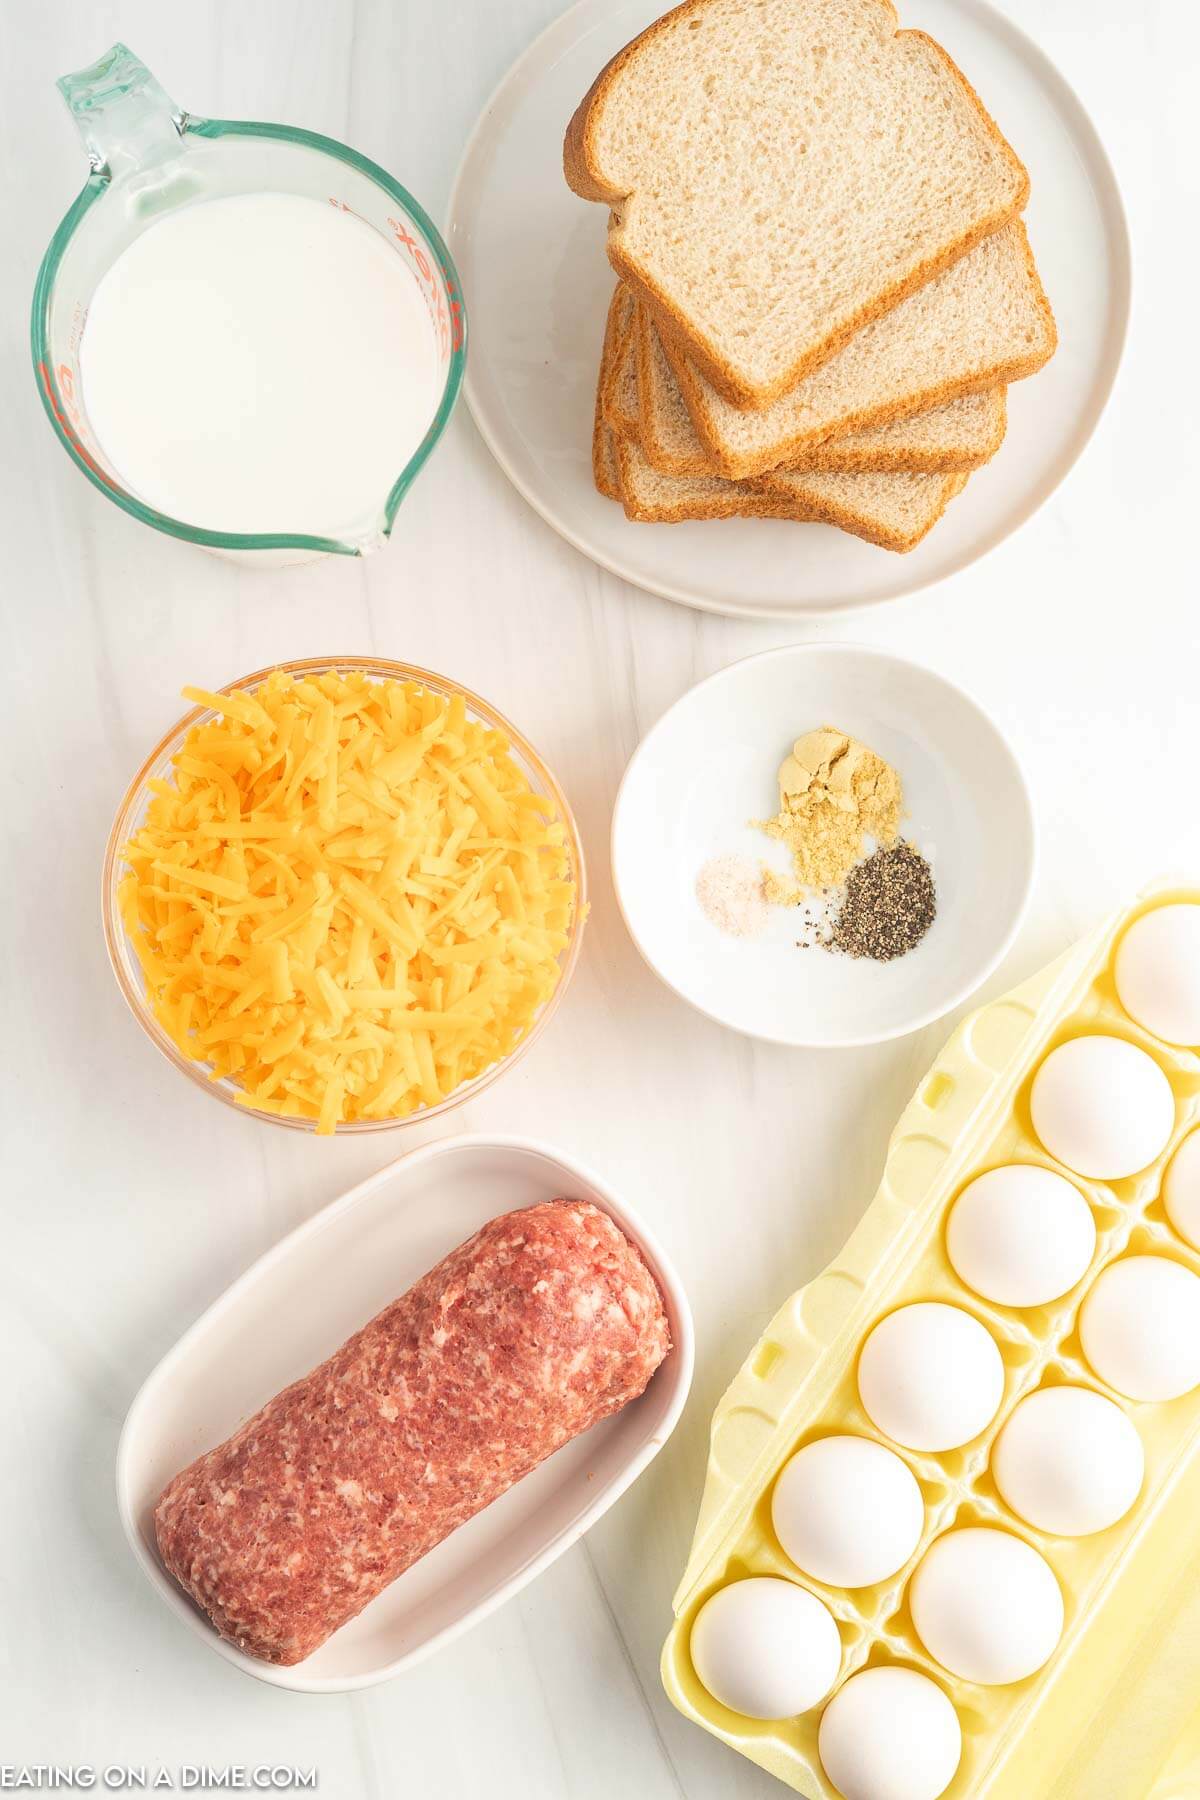 Ingredients needed - pork sausage, white bread, cheese, eggs, milk, dry mustard, pepper and salt